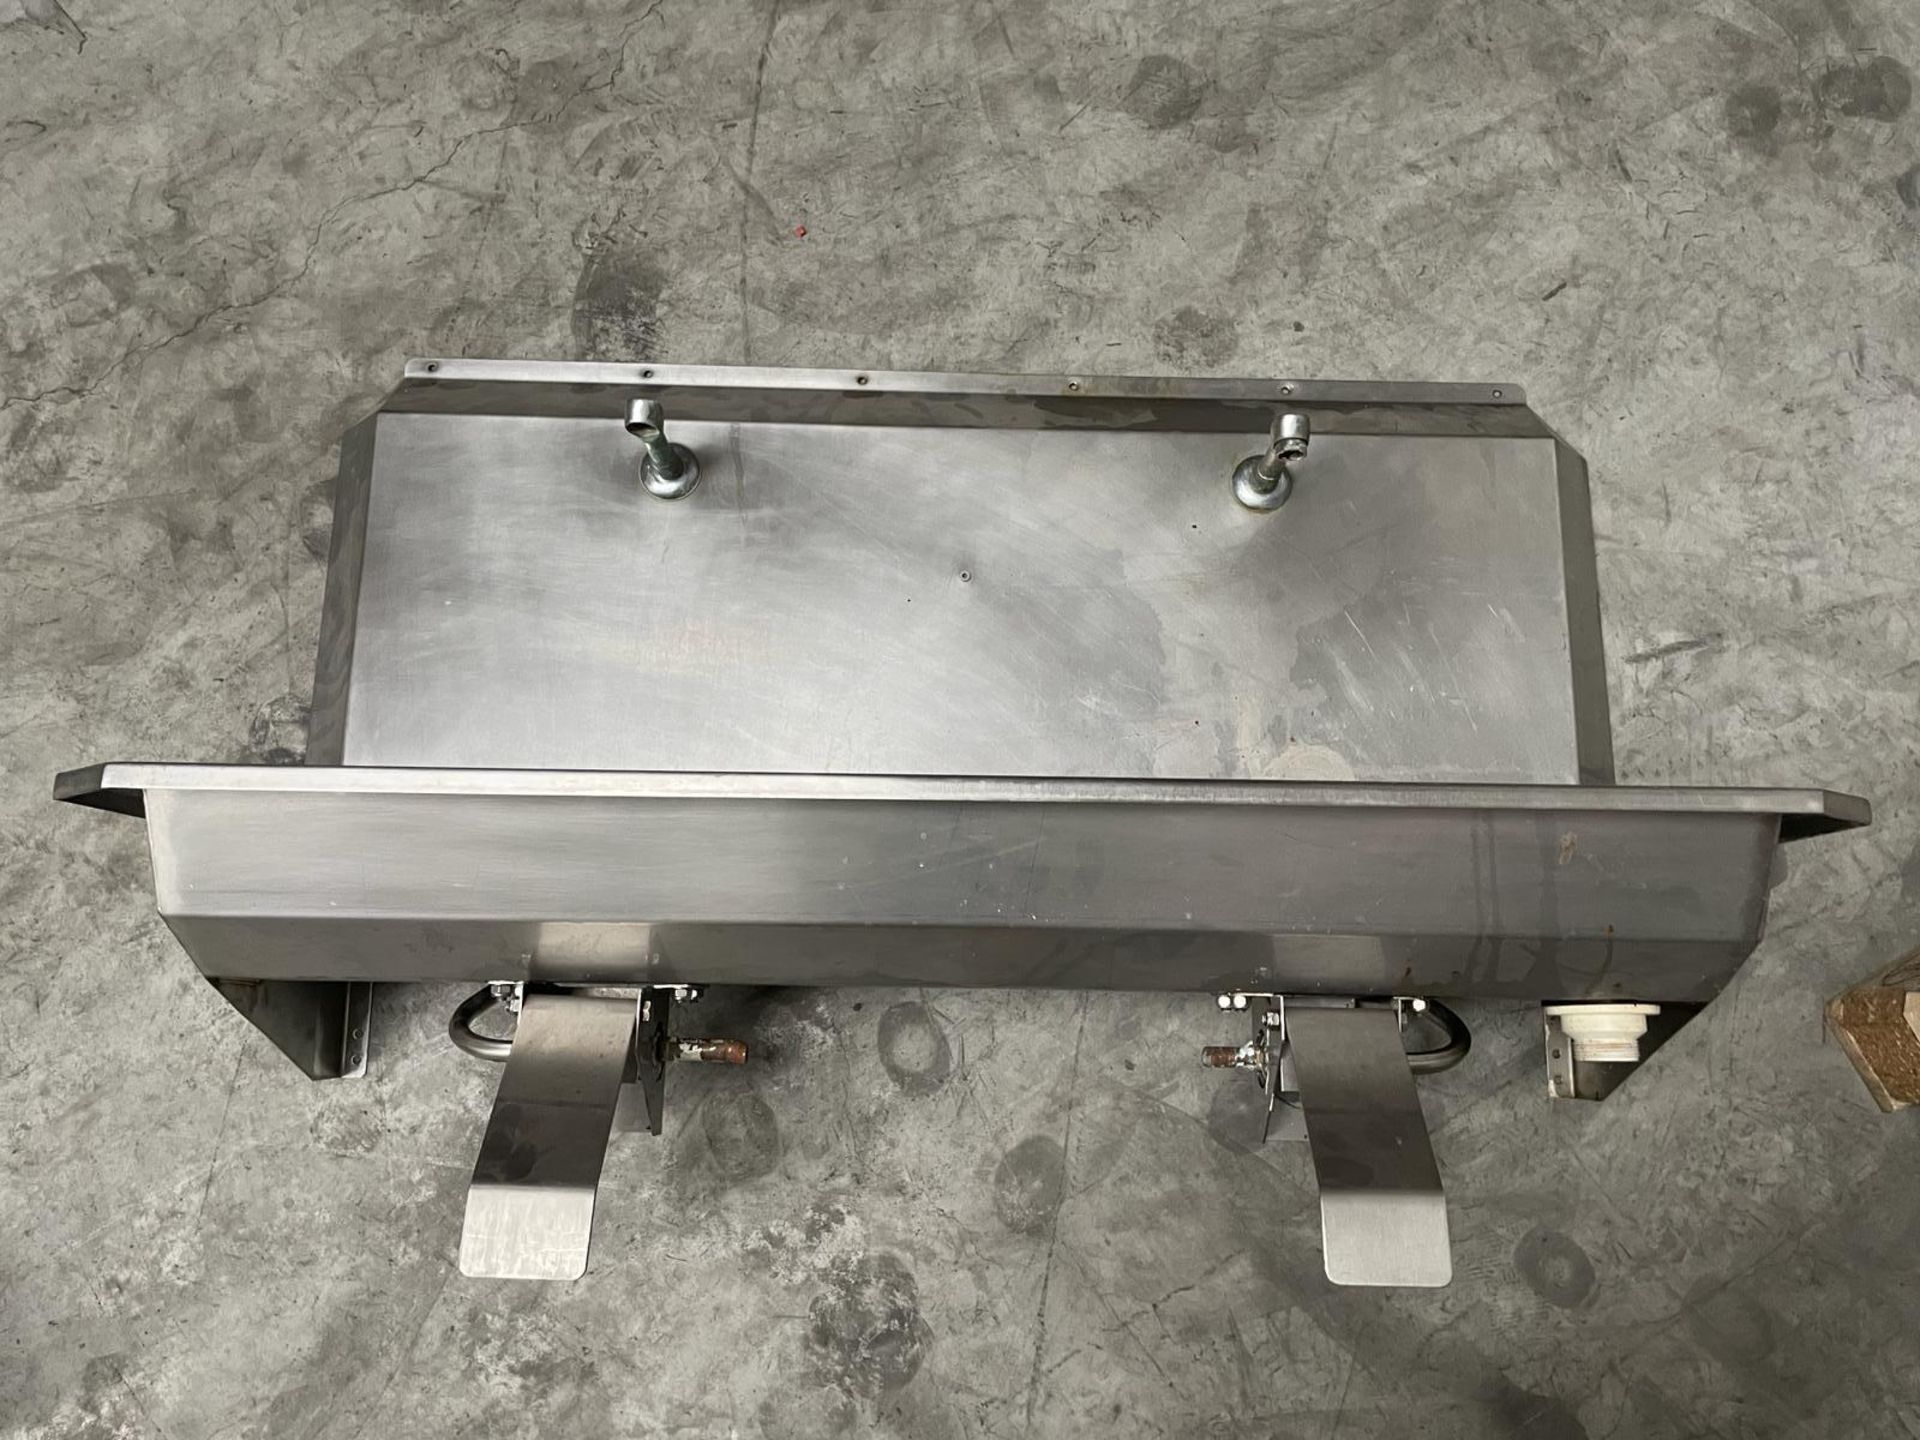 1 x Twin tap knee operated sink 1100 x 400 x 650 mm, 2 x single tap knee operated sinks (1 missing - Image 2 of 4